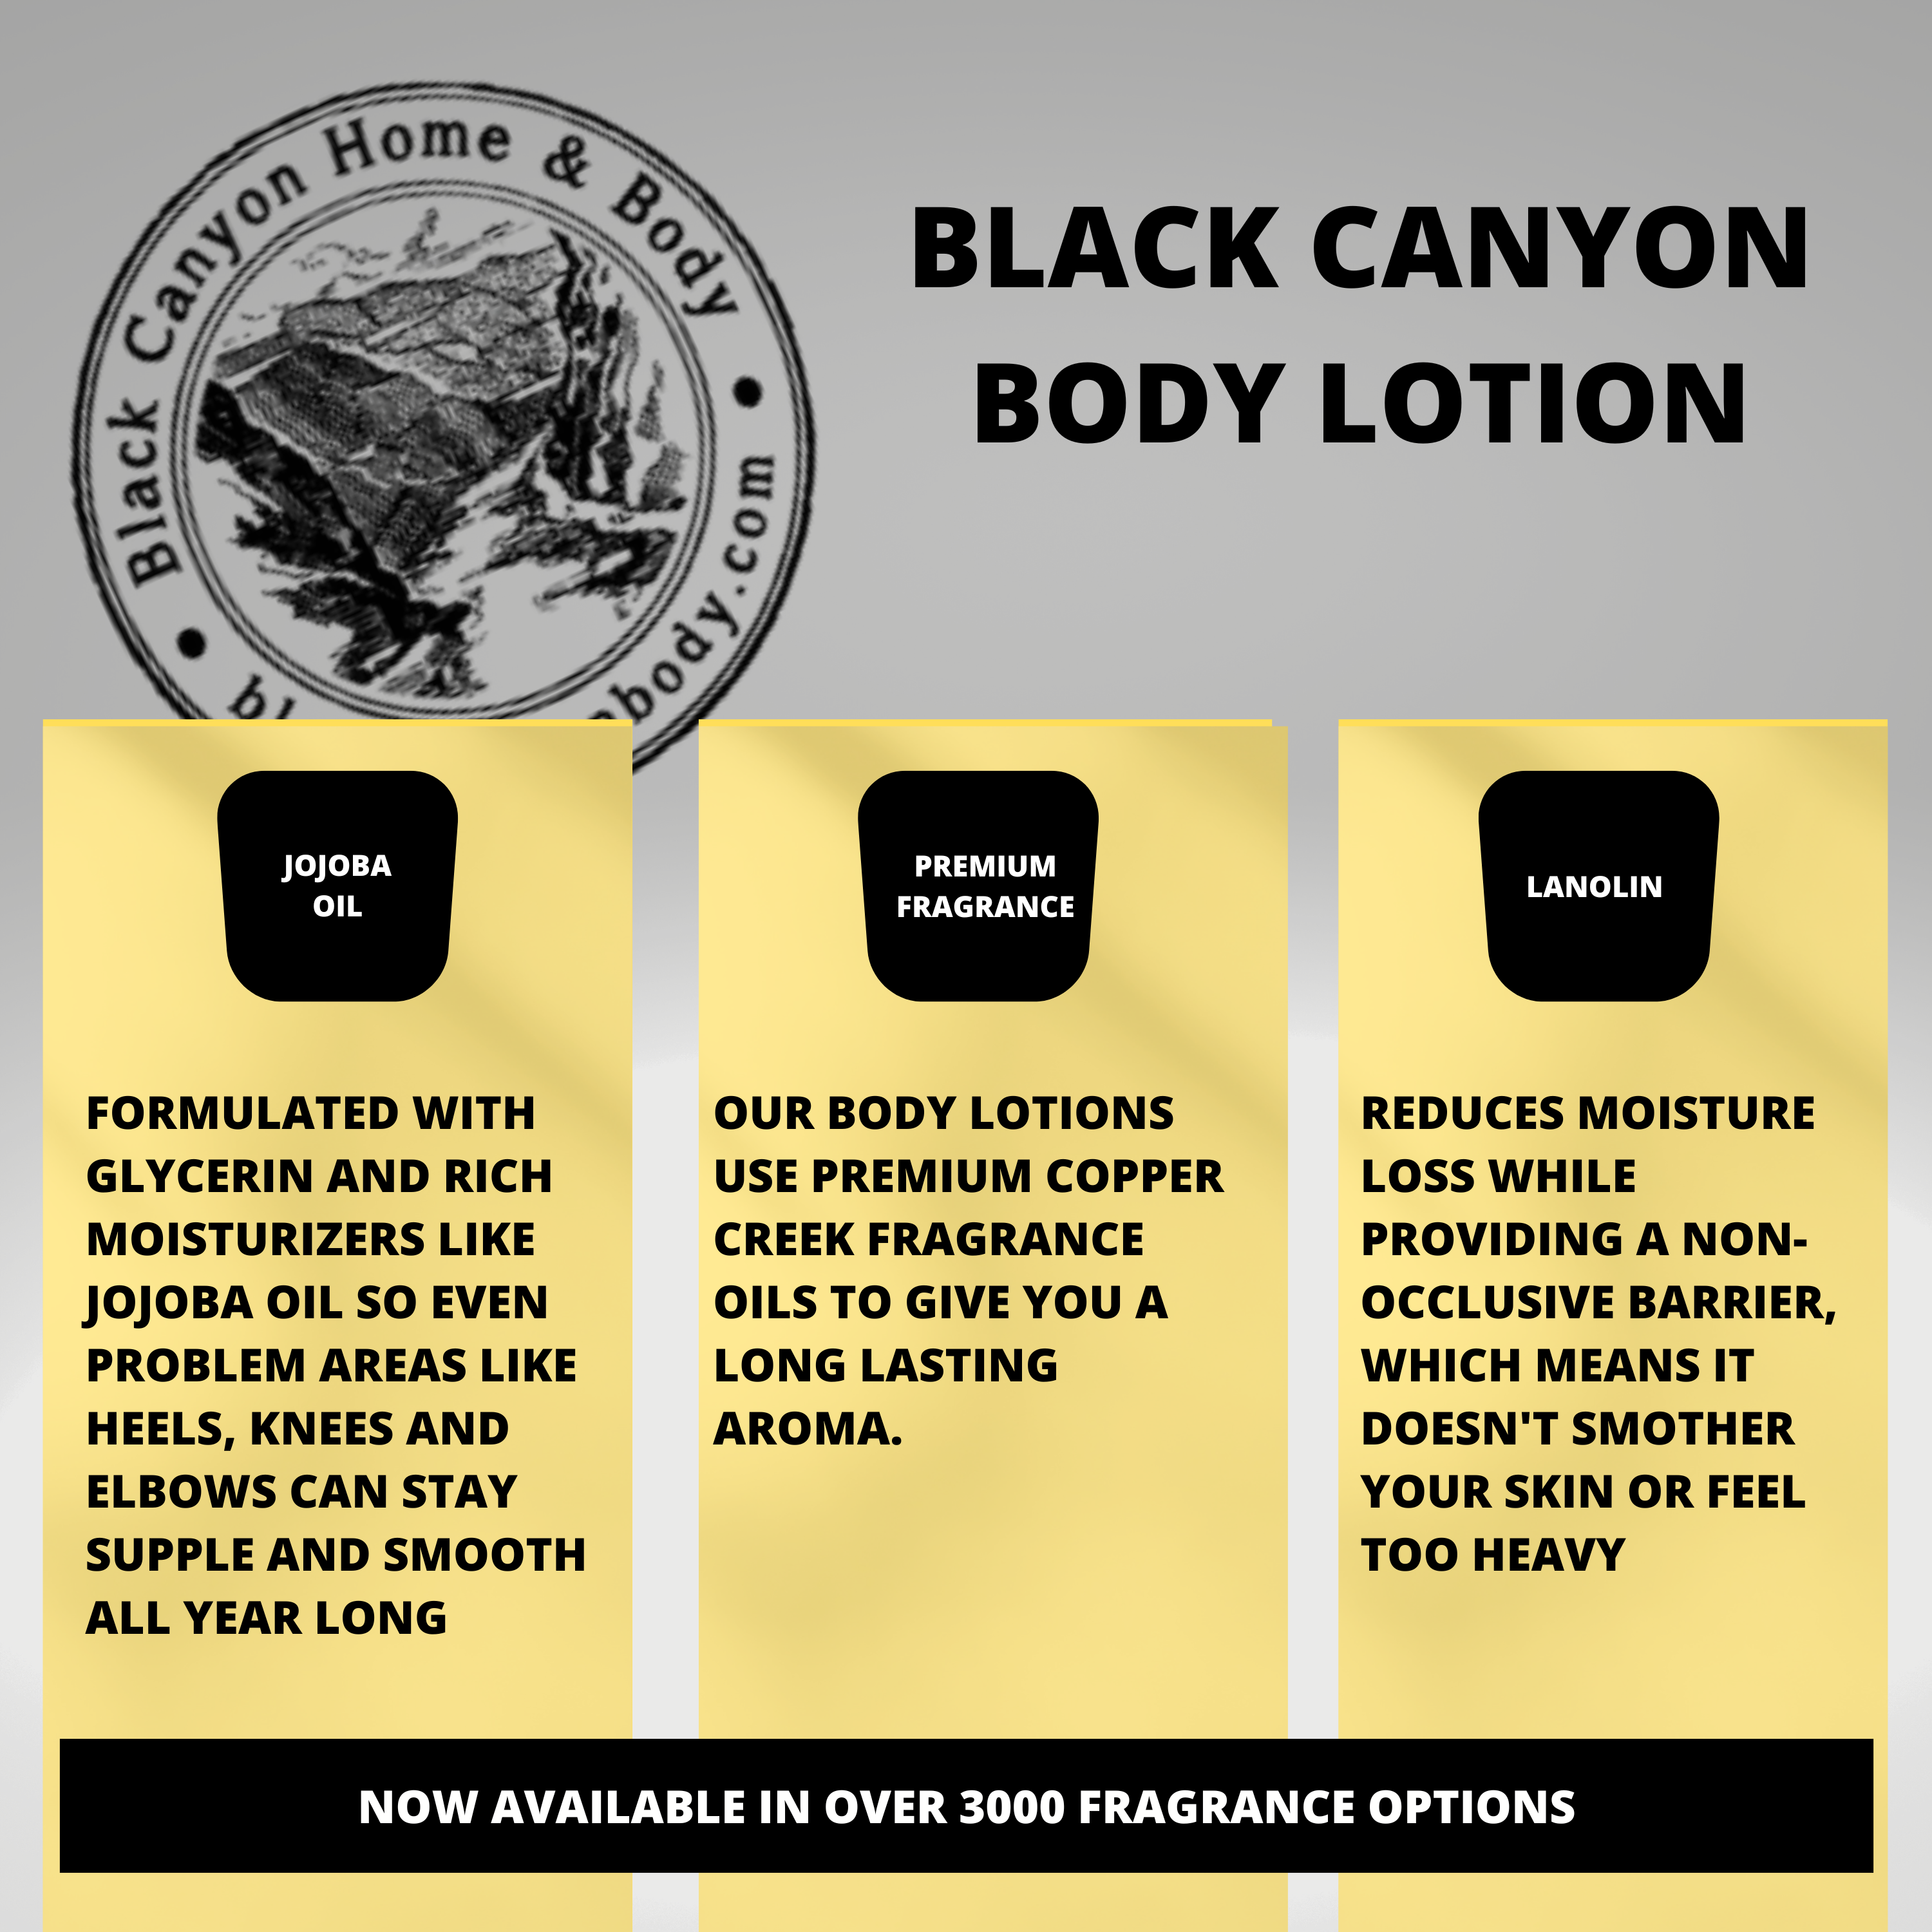 Black Canyon Acai Lemon & Rose Scented Luxury Body Lotion with Lanolin and Jojoba Oil